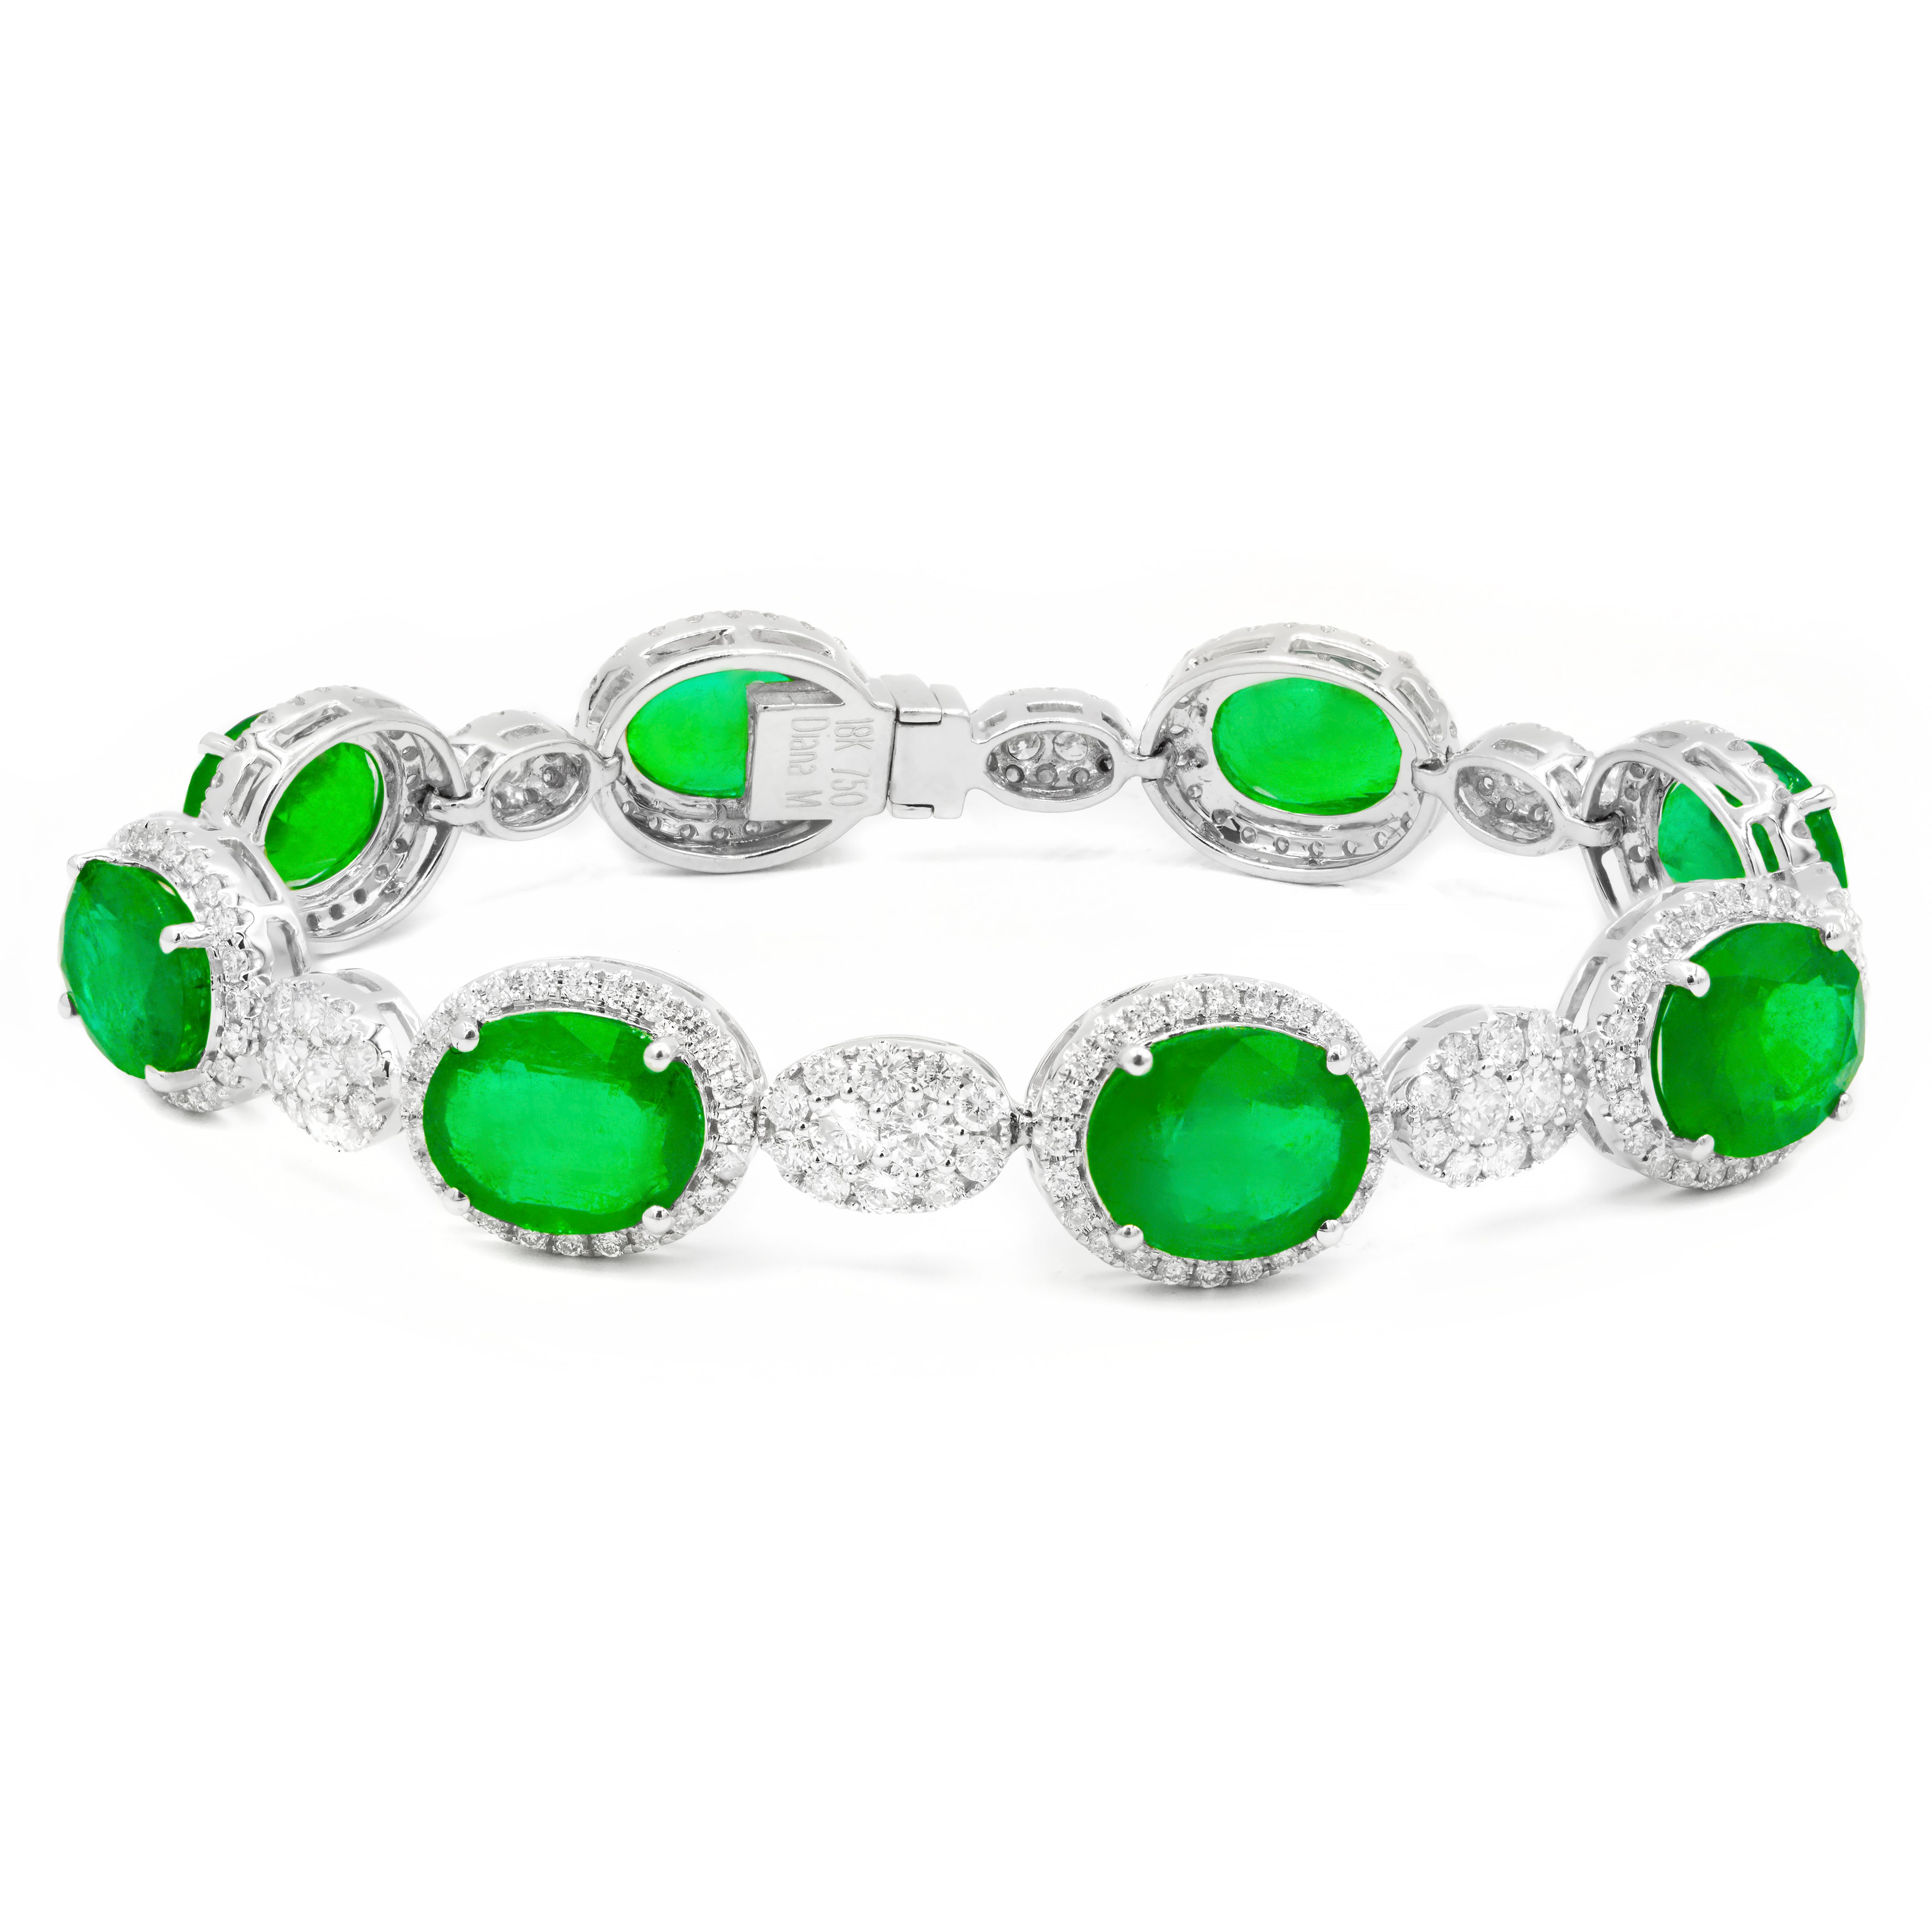 Oval Emerald & Diamond Bracelet